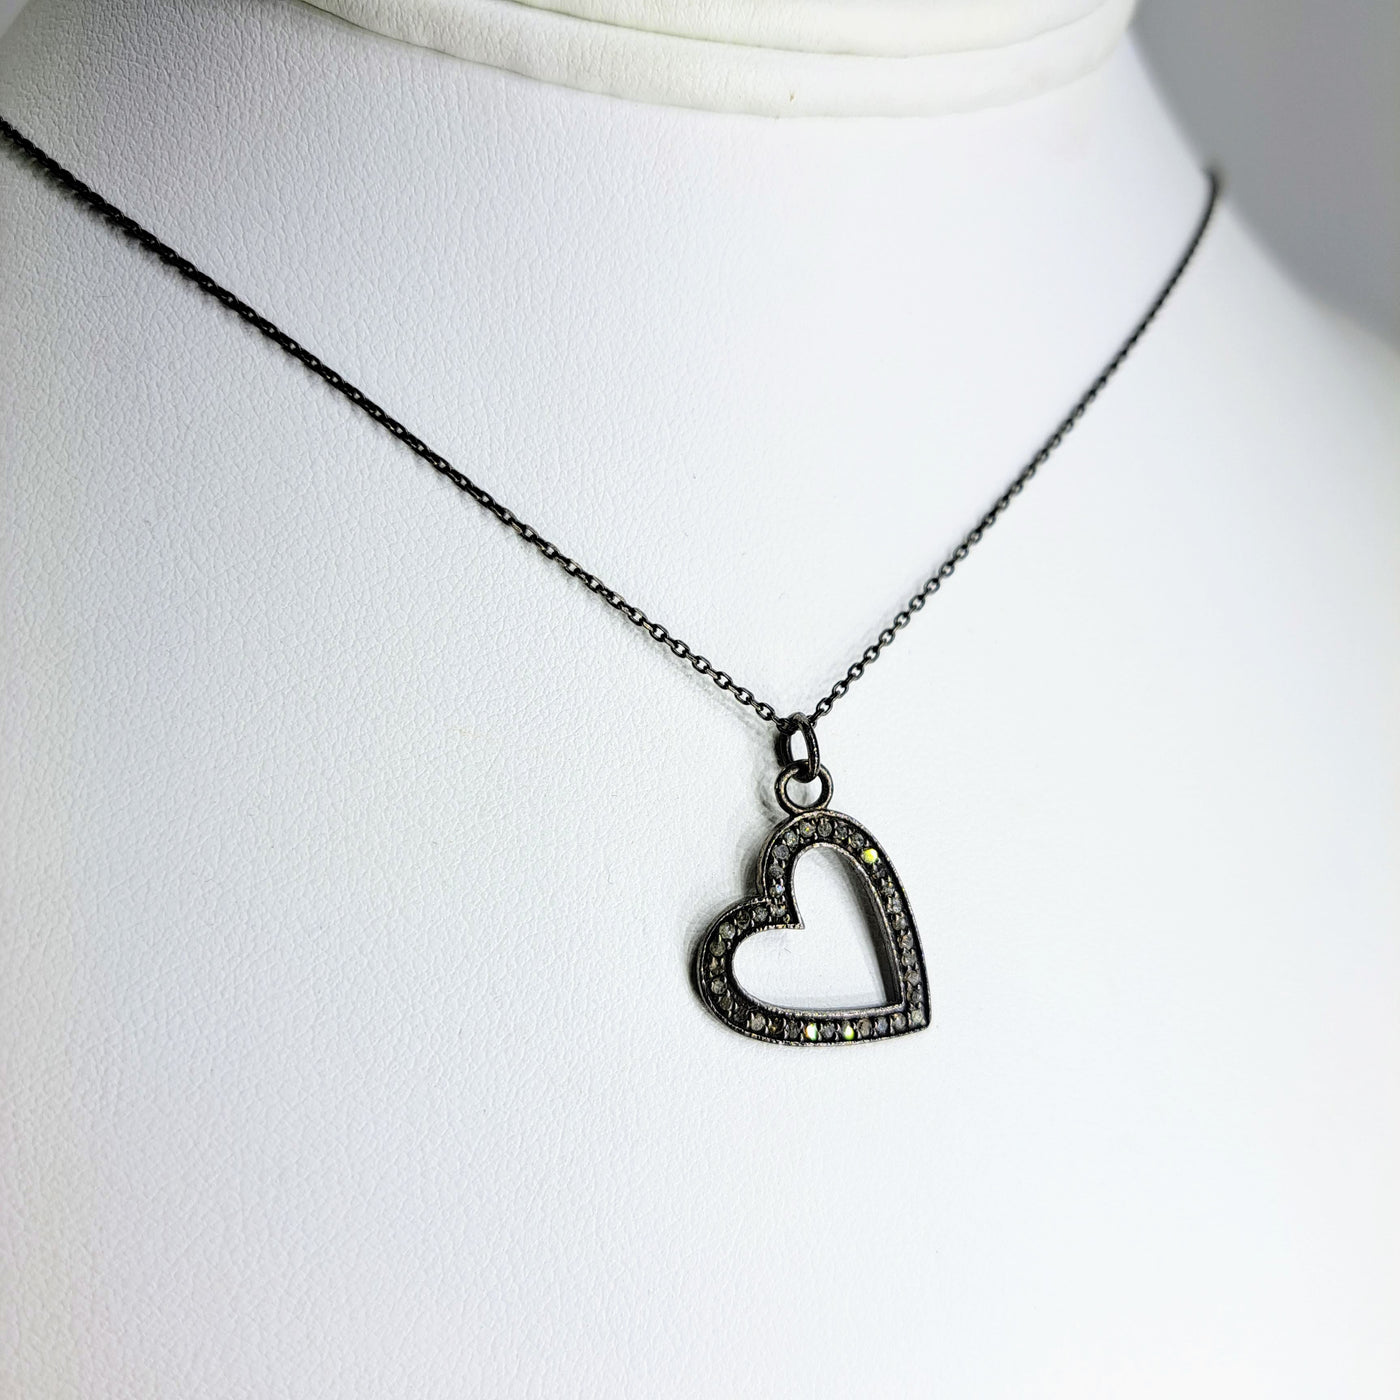 "My Heart" Pendant Necklace - Diamonds, Black Sterling